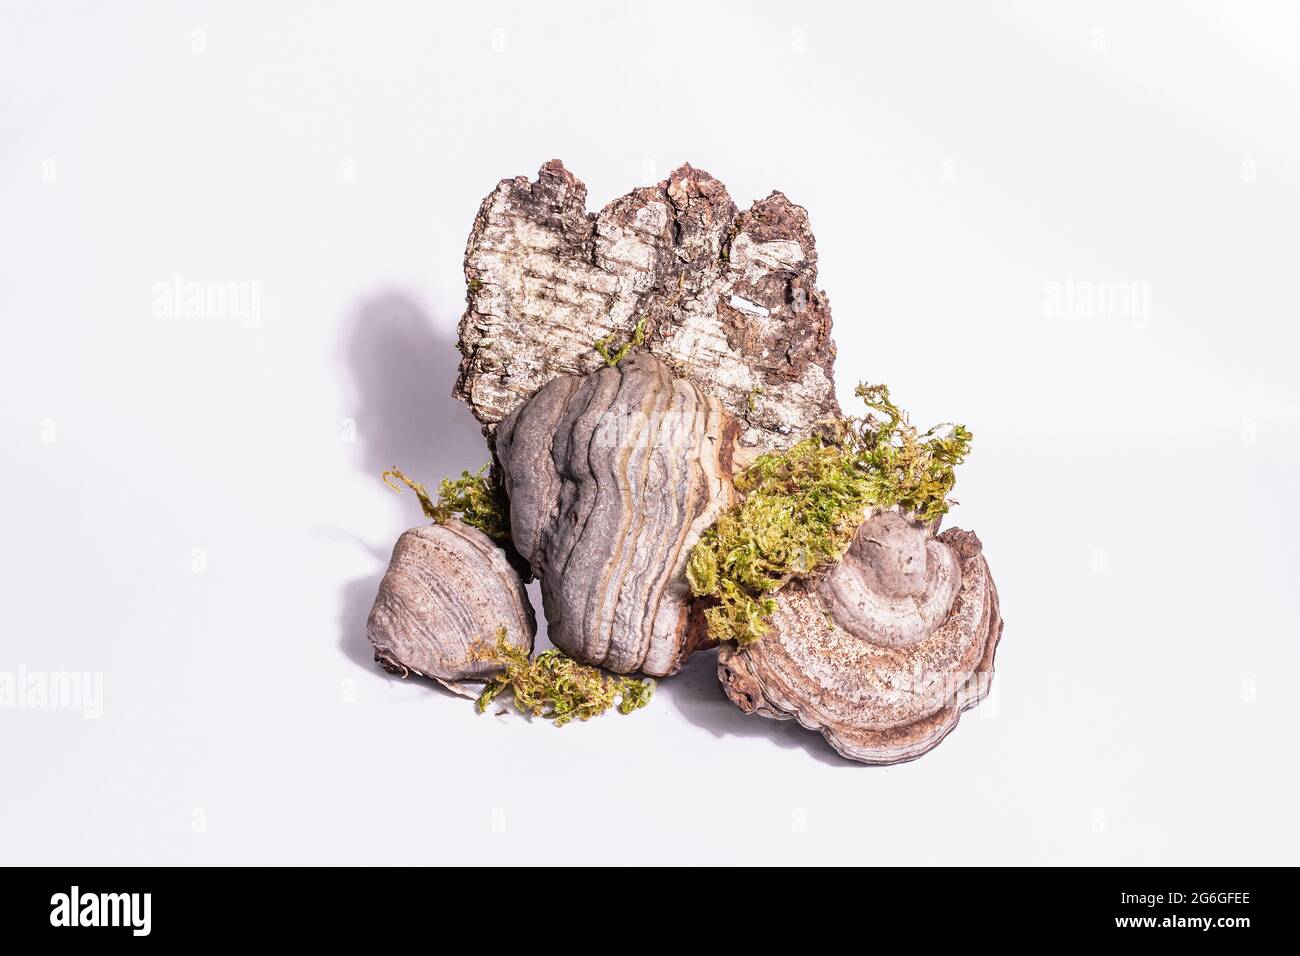 Mushroom tinder fungus or Fomes fomentarius on isolated on white background Stock Photo